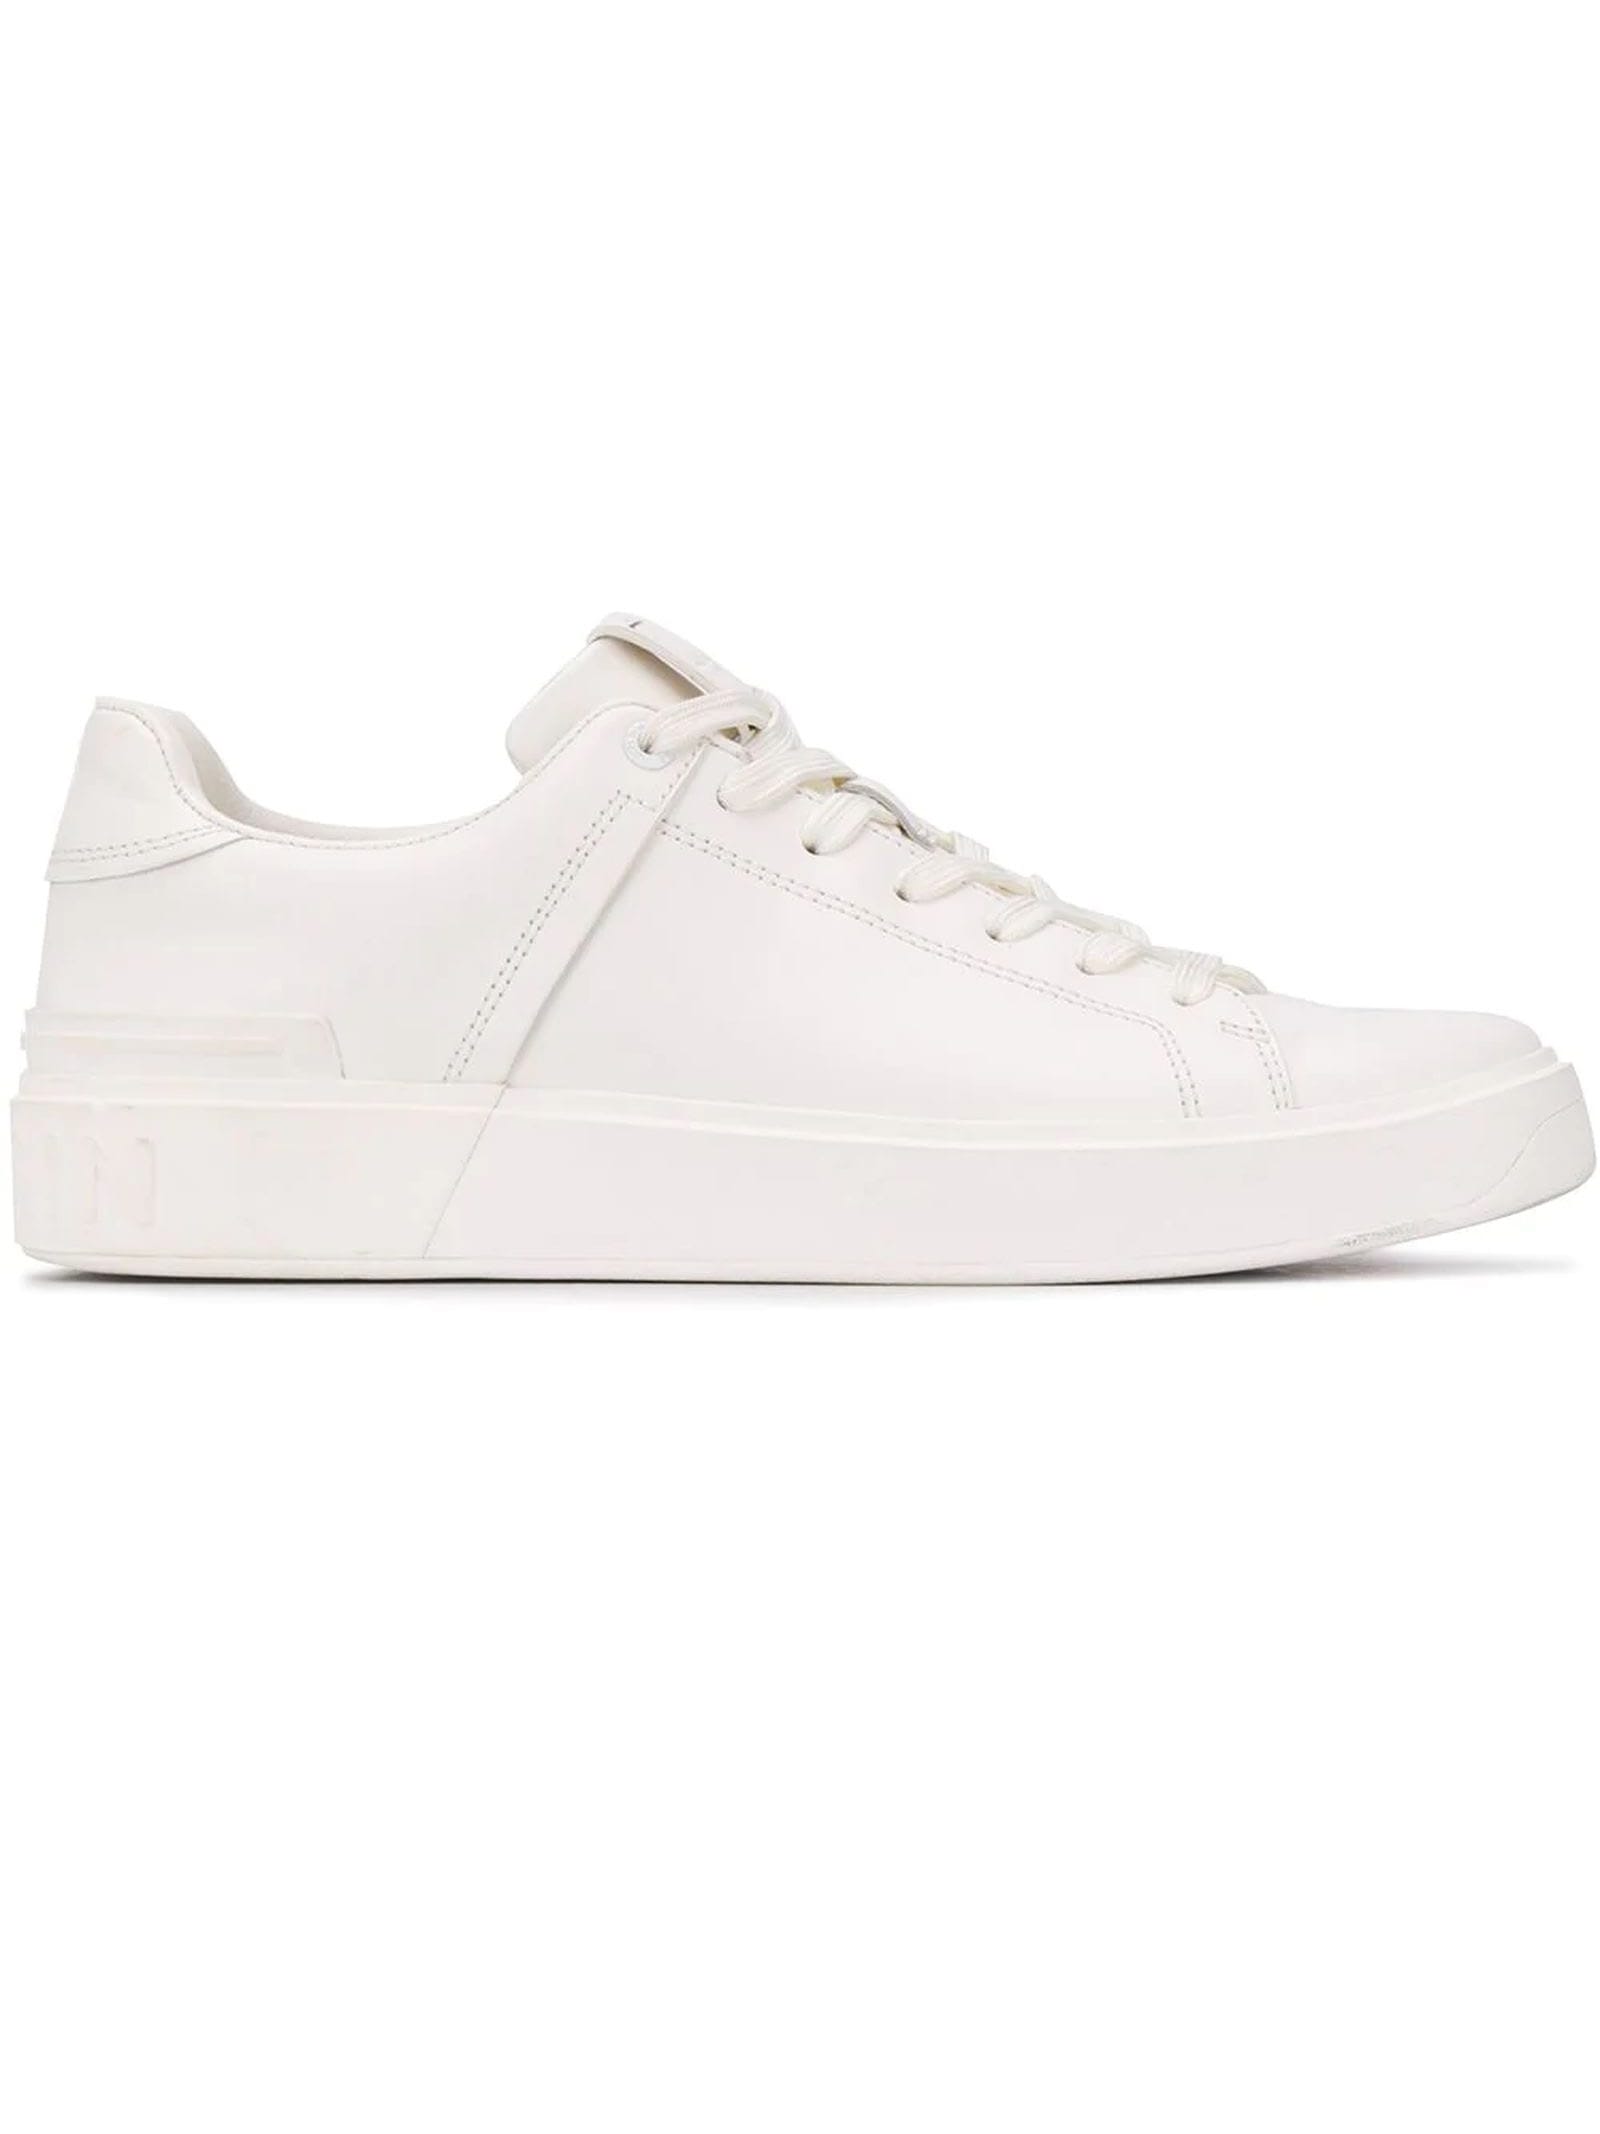 Balmain White Calfskin B-court Sneakers